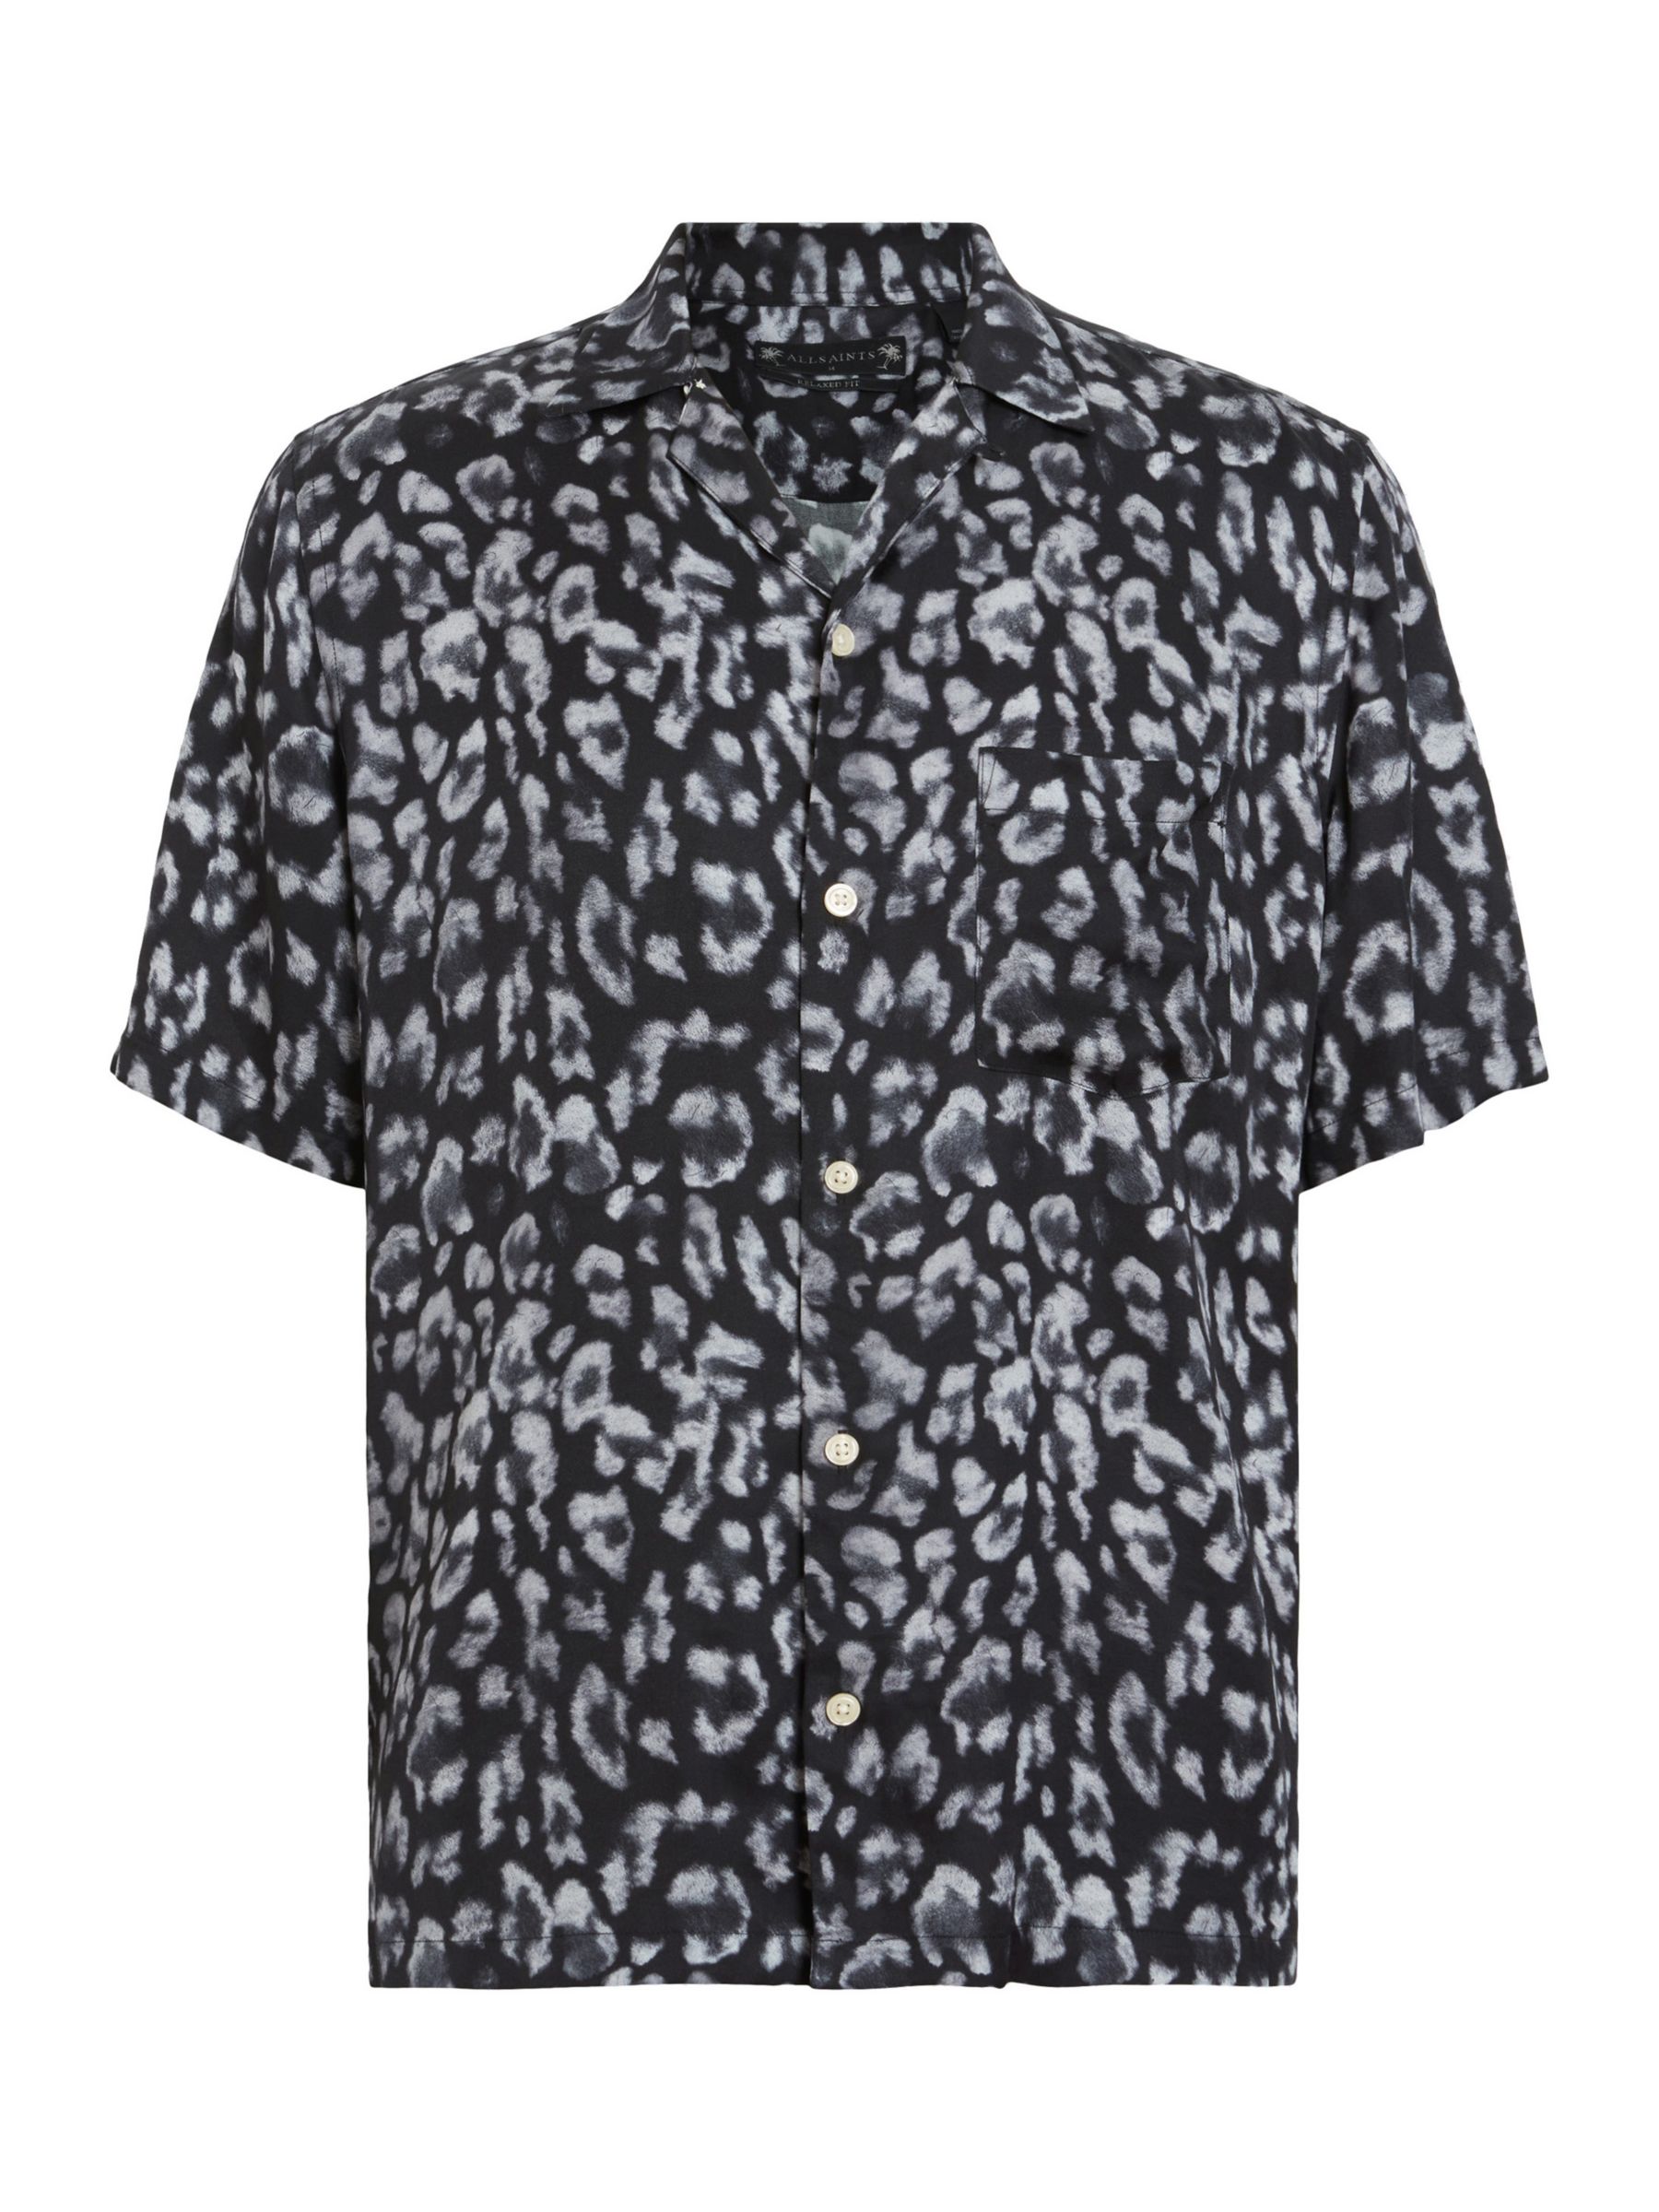 Buy AllSaints Leopaz Leopard Print Short Sleeve Shirt Online at johnlewis.com